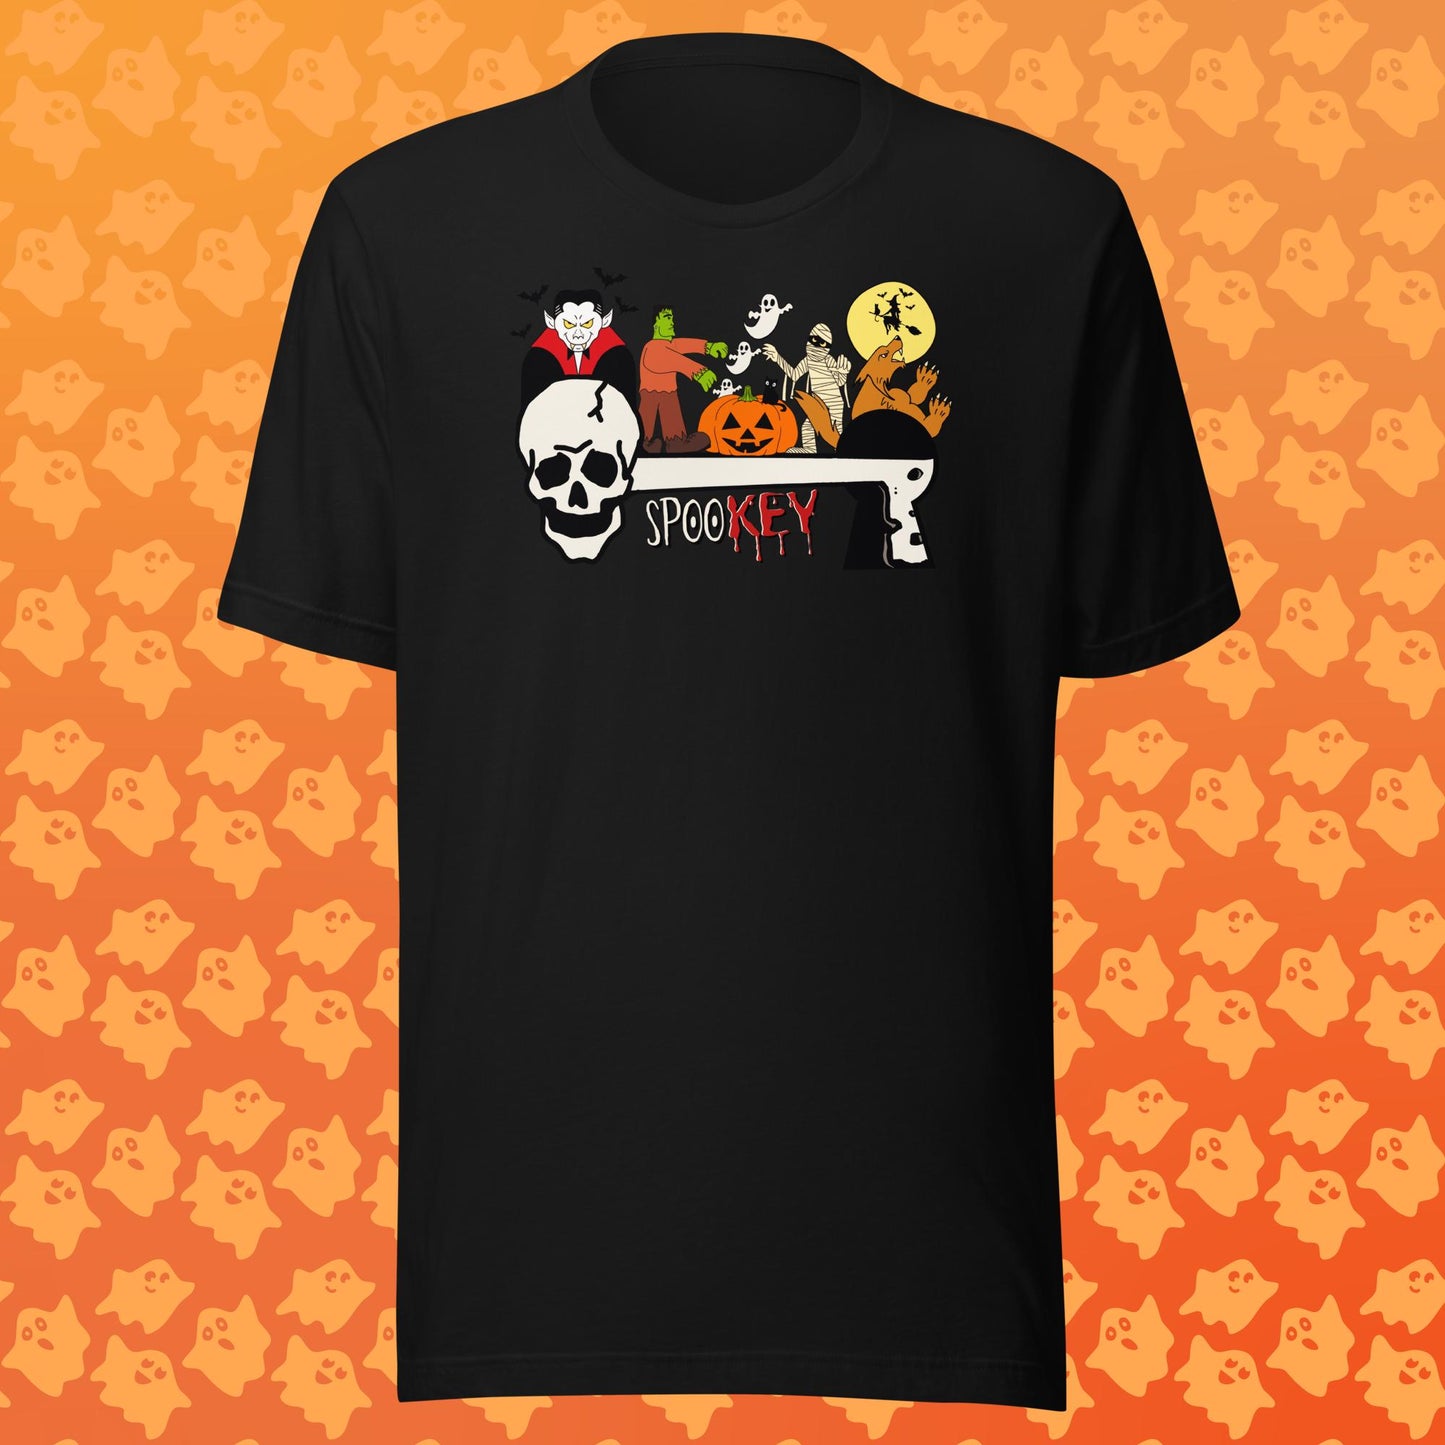 Spookey Halloween Unisex t-shirt